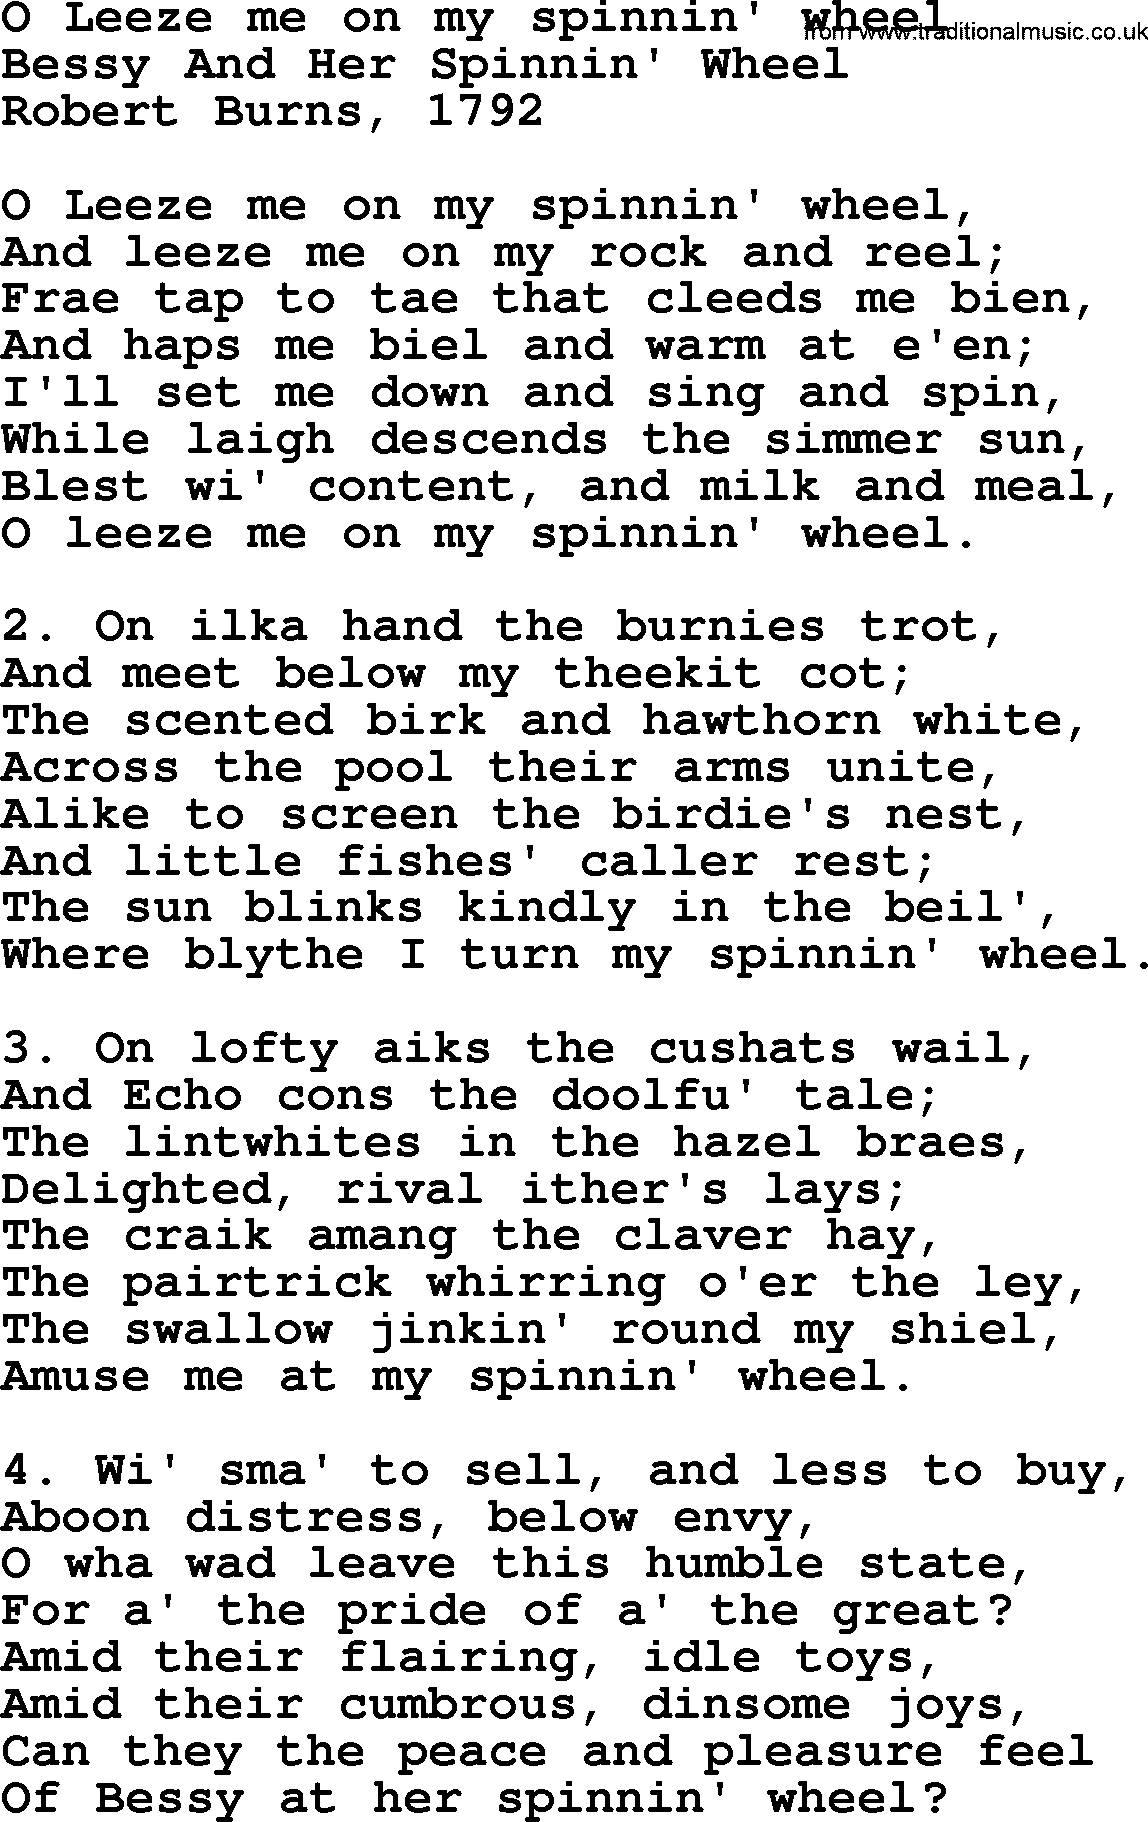 Robert Burns Songs & Lyrics: O Leeze Me On My Spinnin' Wheel